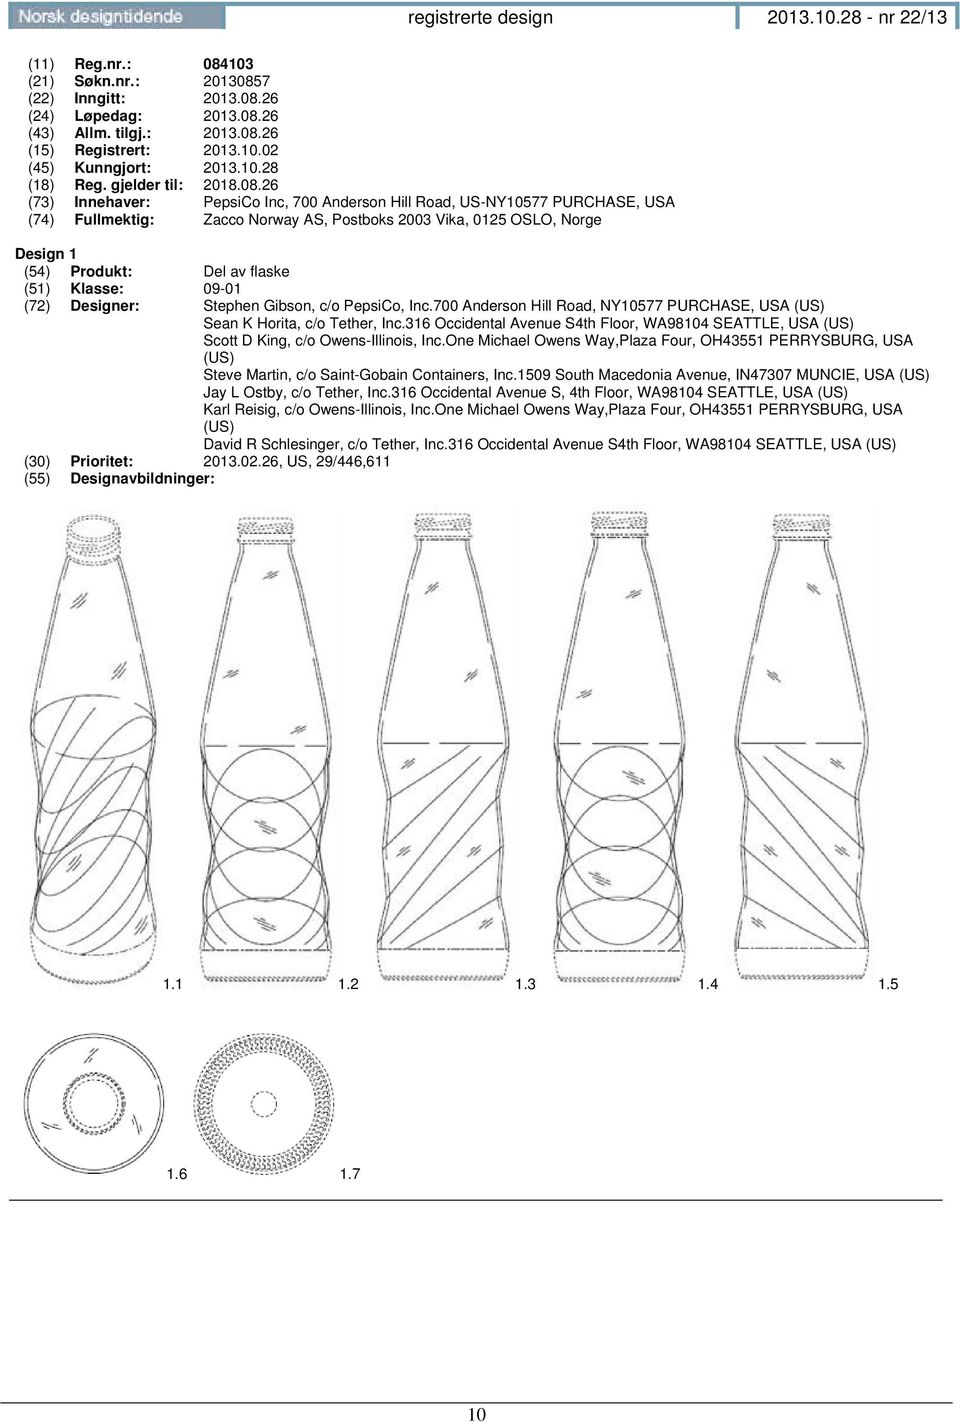 26 (73) Innehaver: PepsiCo Inc, 700 Anderson Hill Road, US-NY10577 PURCHASE, USA (74) Fullmektig: Zacco Norway AS, Postboks 2003 Vika, 0125 OSLO, Norge Design 1 (54) Produkt: Del av flaske (51)